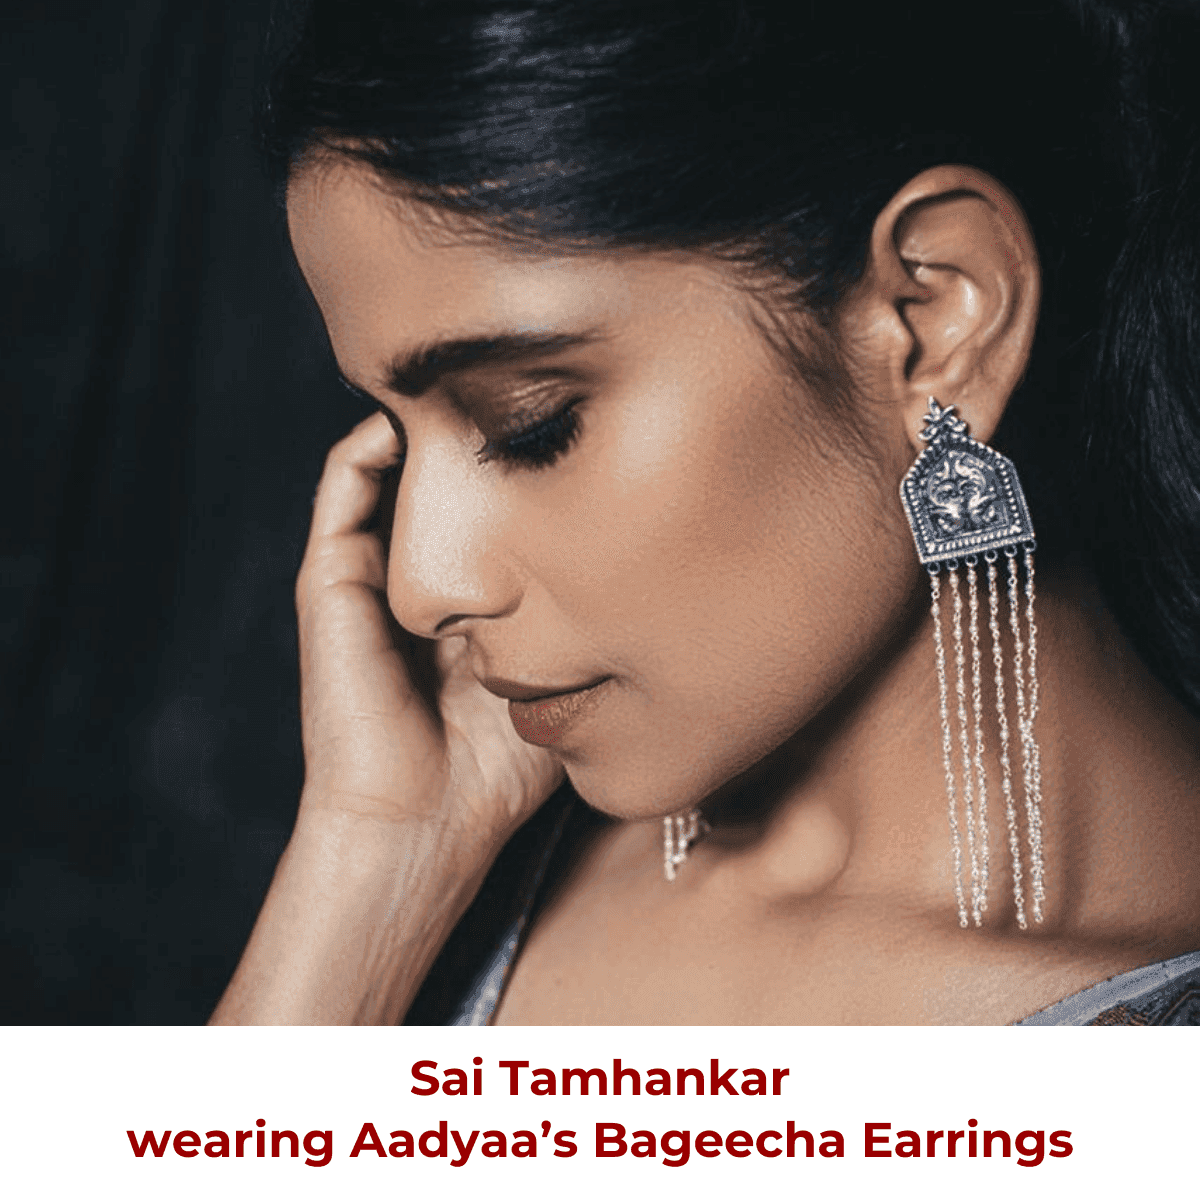 a woman is wearing a pair of earrings